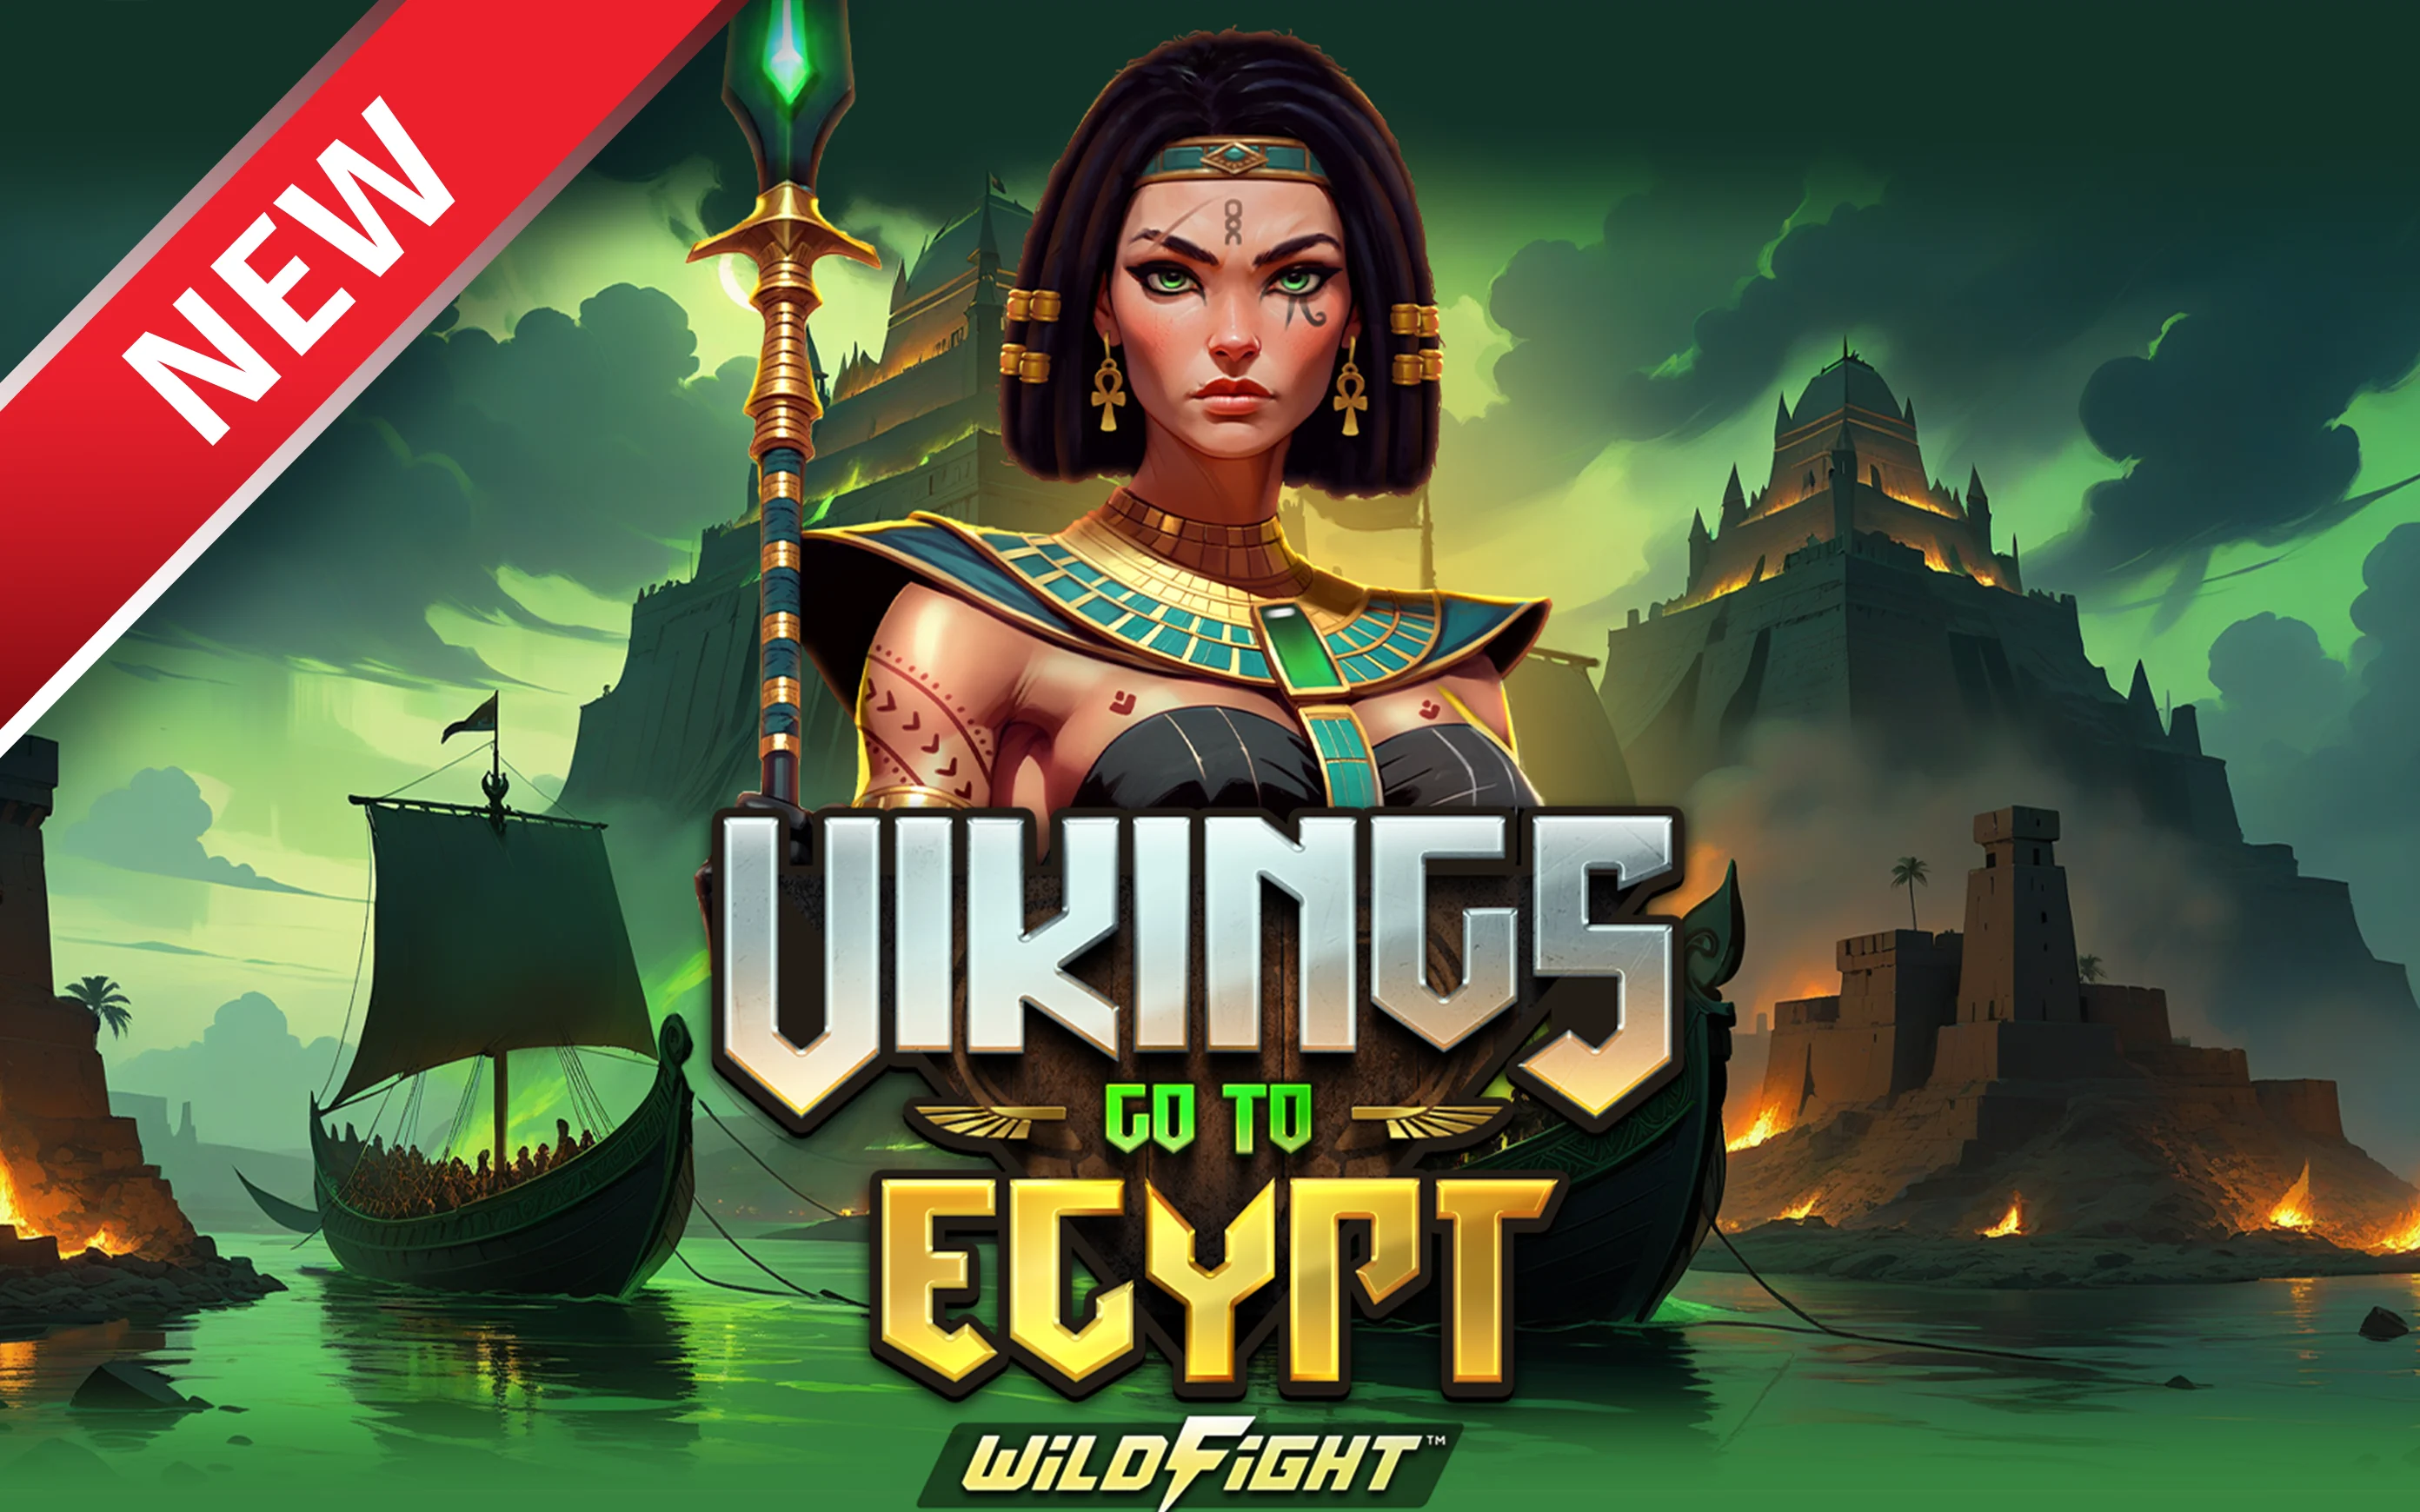 Gioca a Vikings Go To Egypt Wild Fight!™ sul casino online Starcasino.be